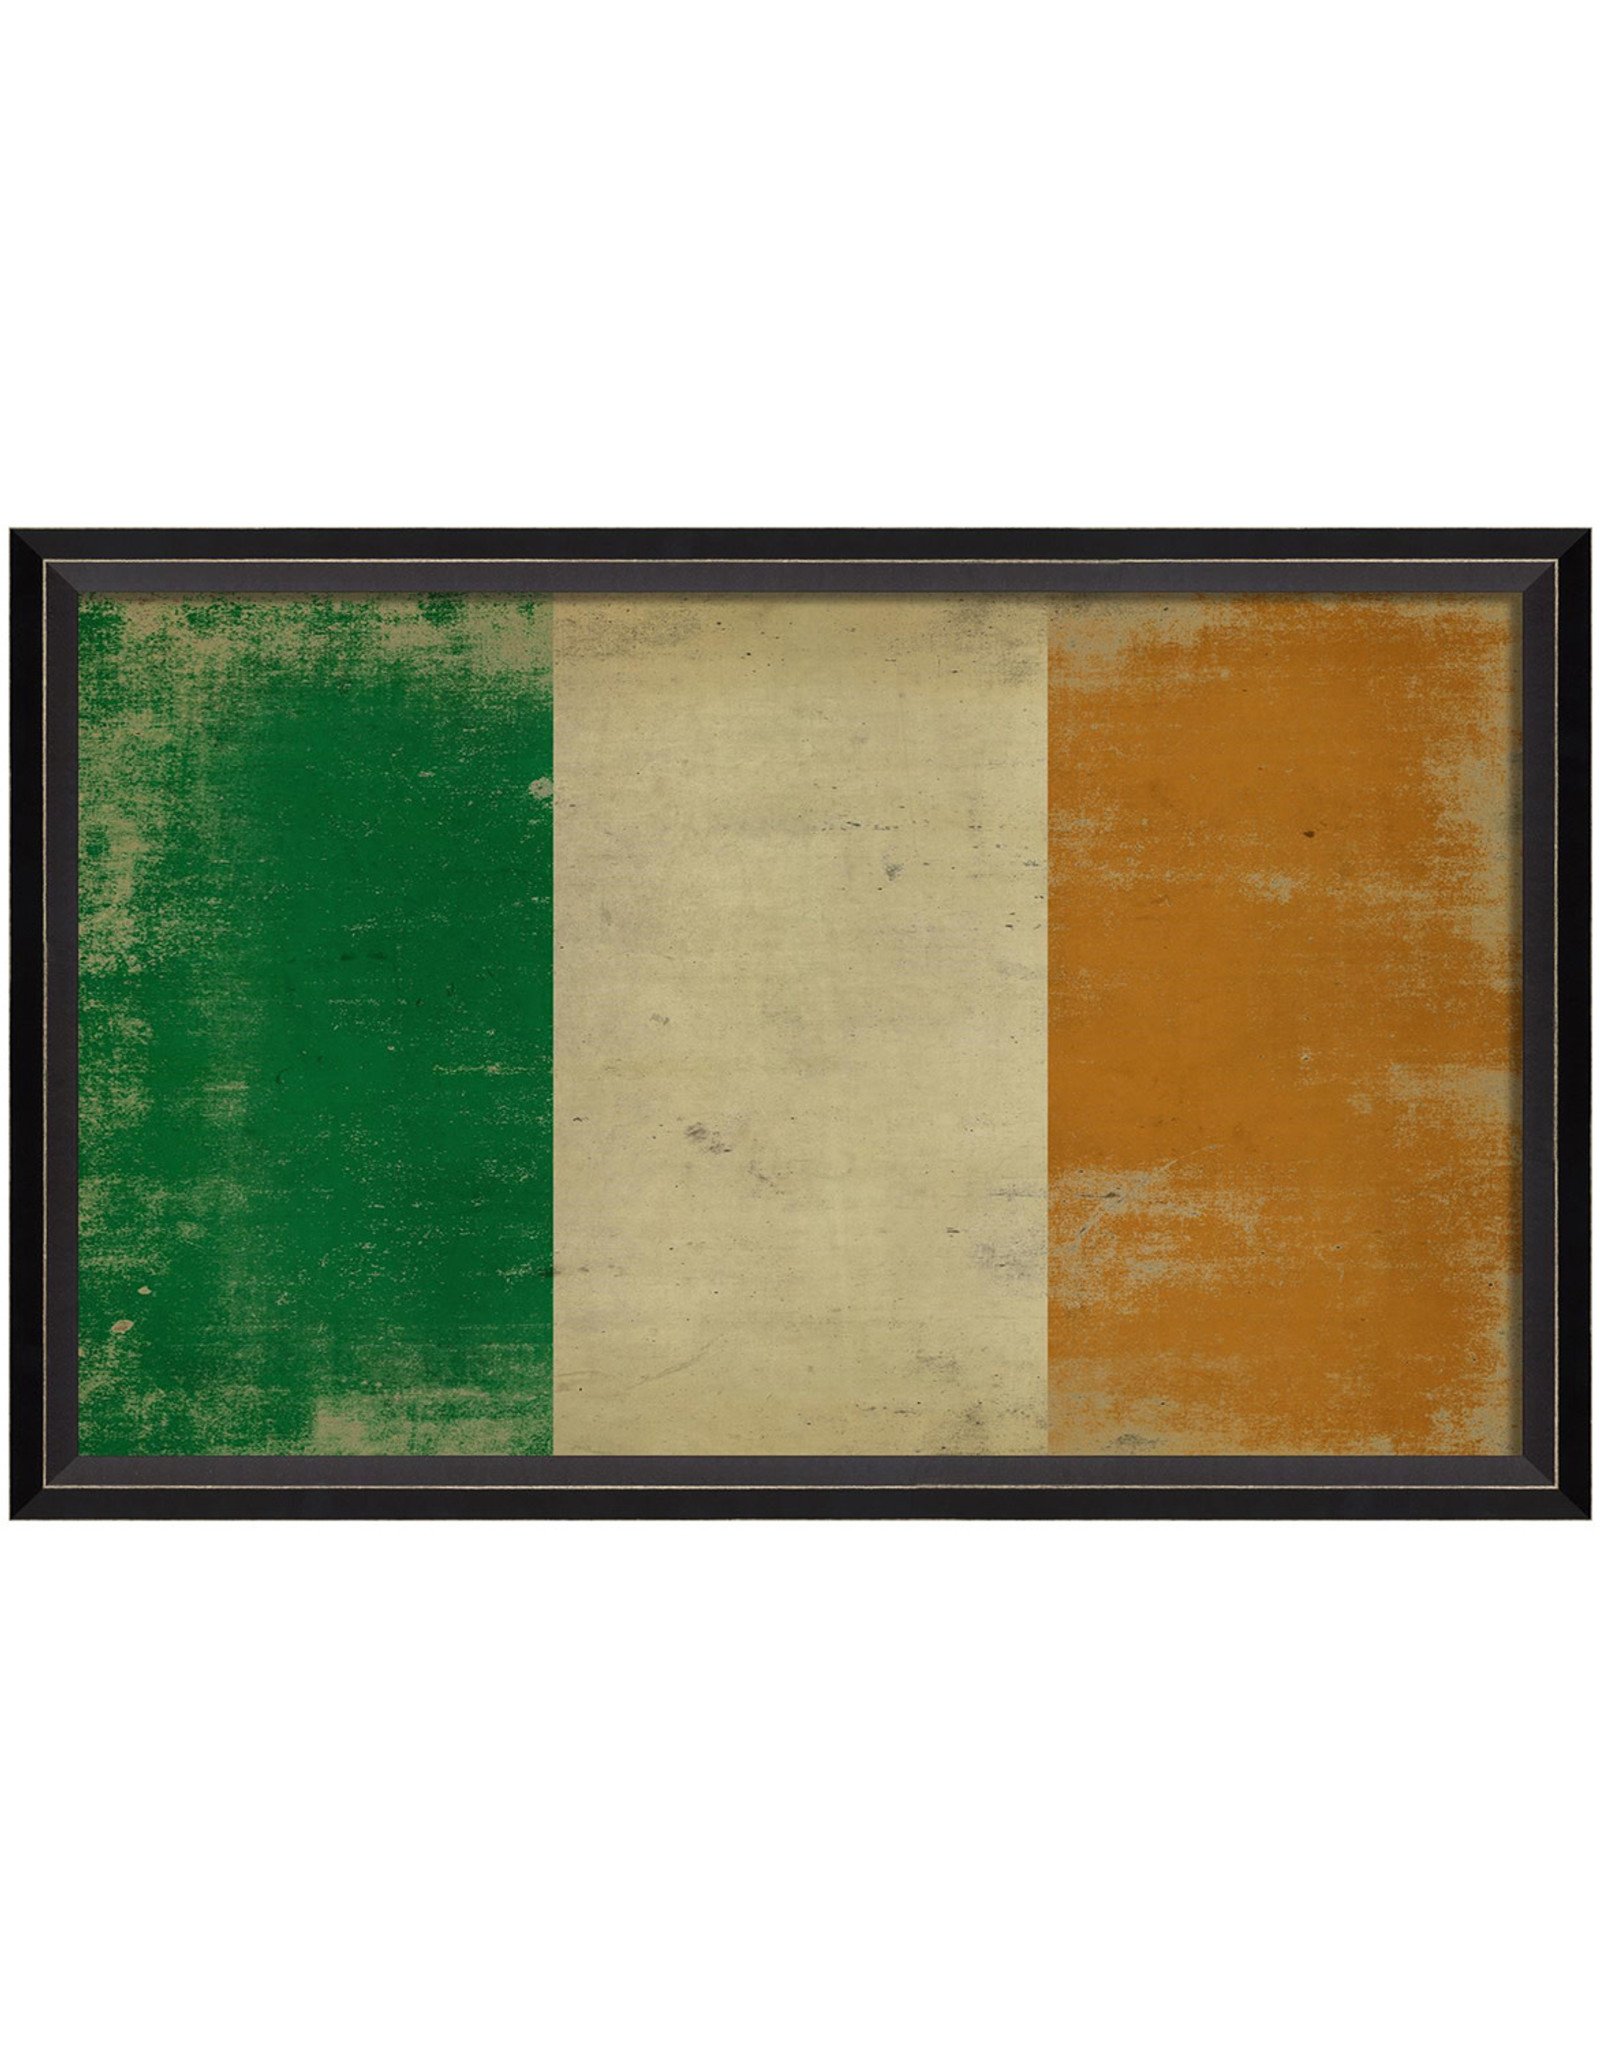 IRISH FLAG Framed Picture - 17.125" x 25.625"